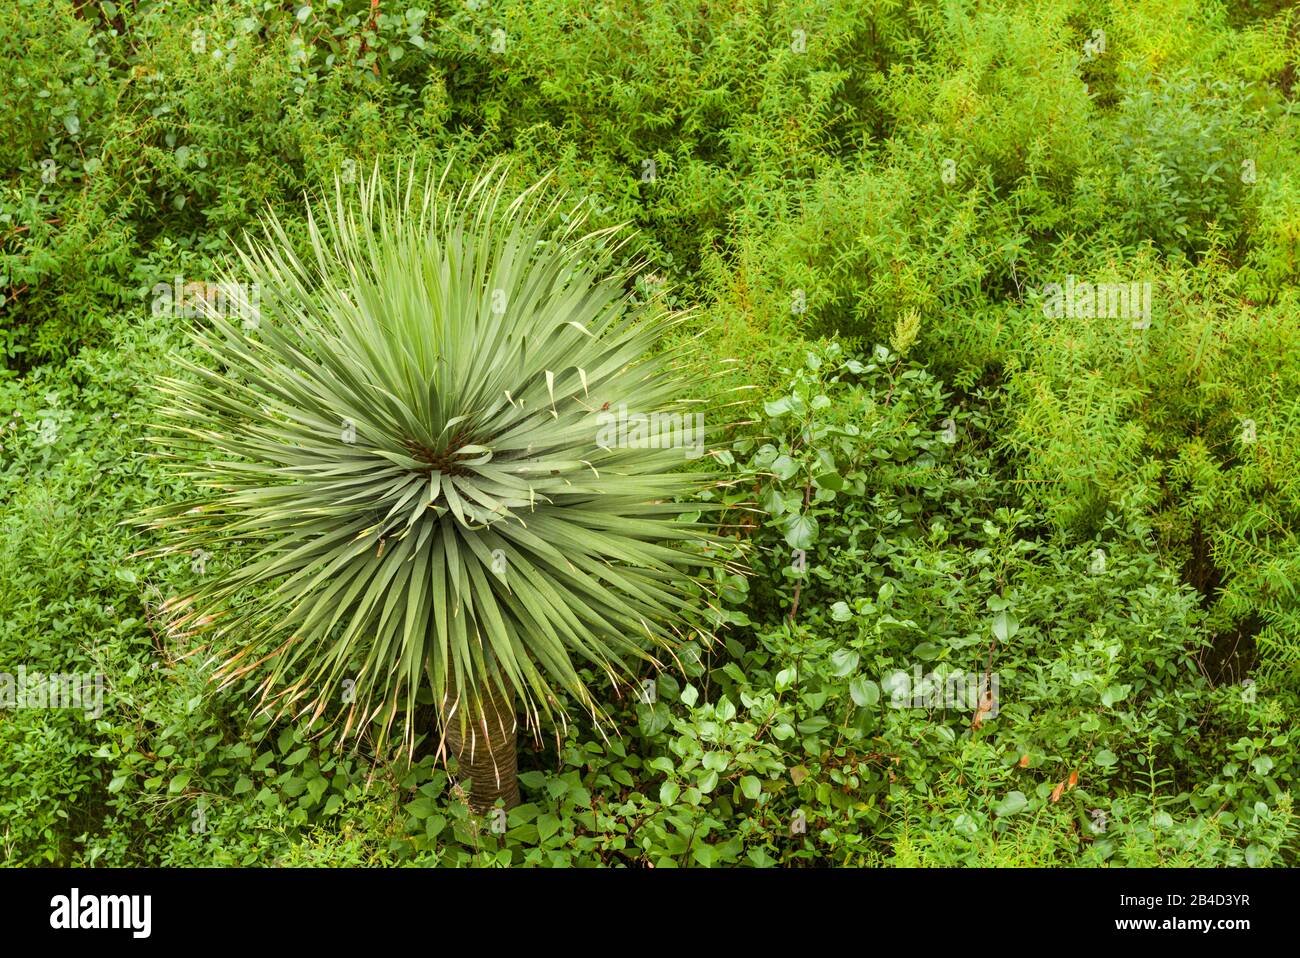 Spain, Canary Islands, La Palma Island, Santa Cruz de la Palma, hillside vegetation Stock Photo